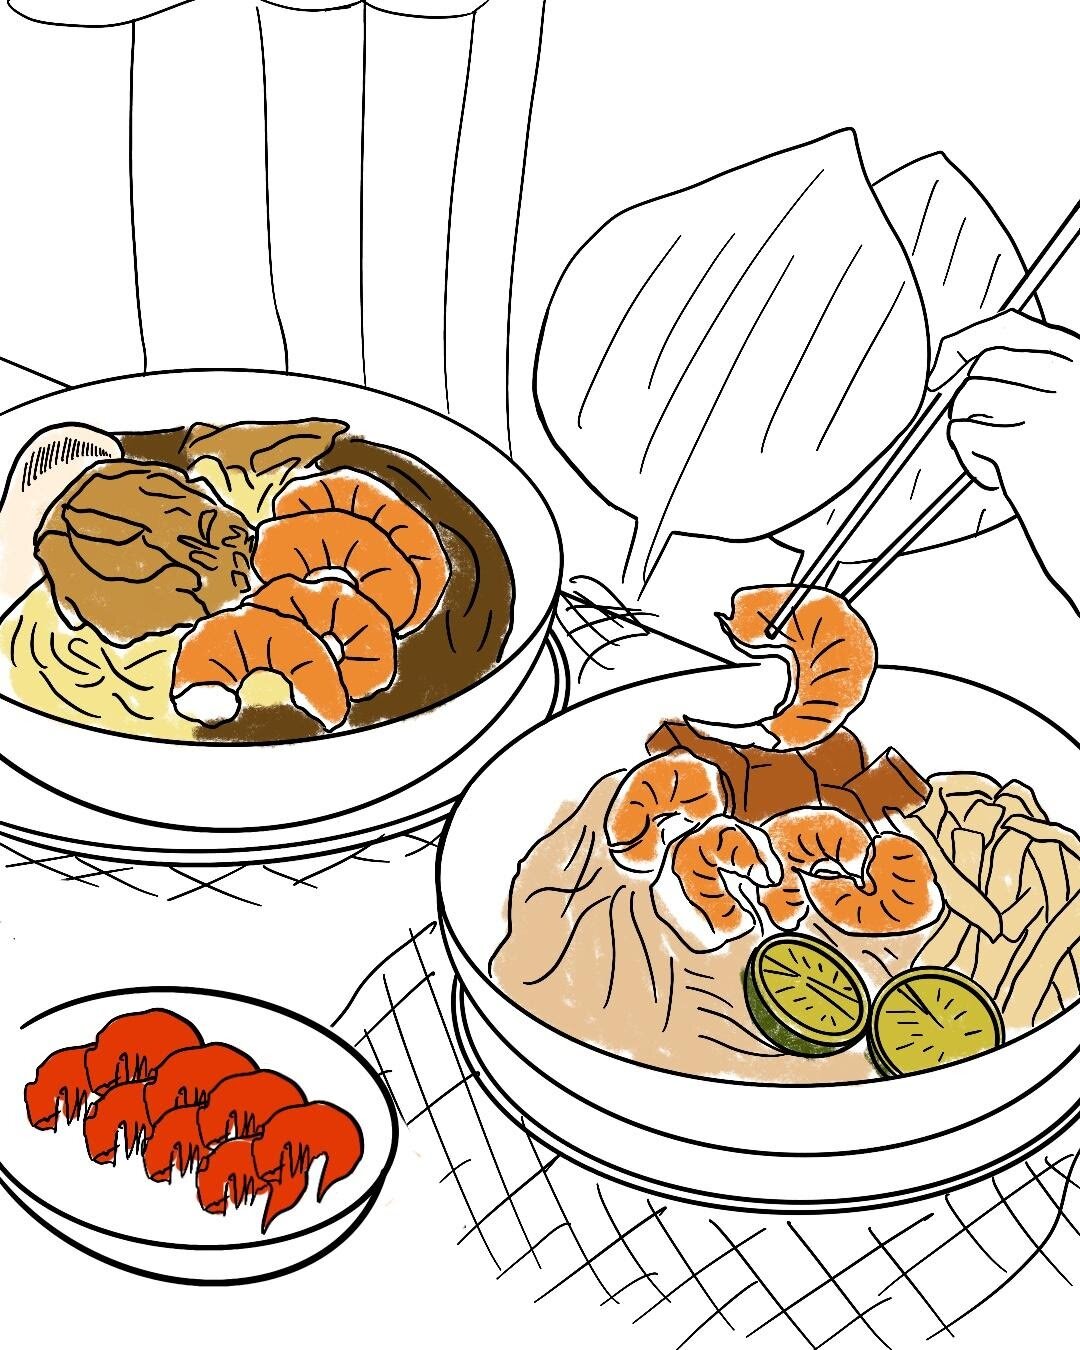 (Sketch of prawn noodles)